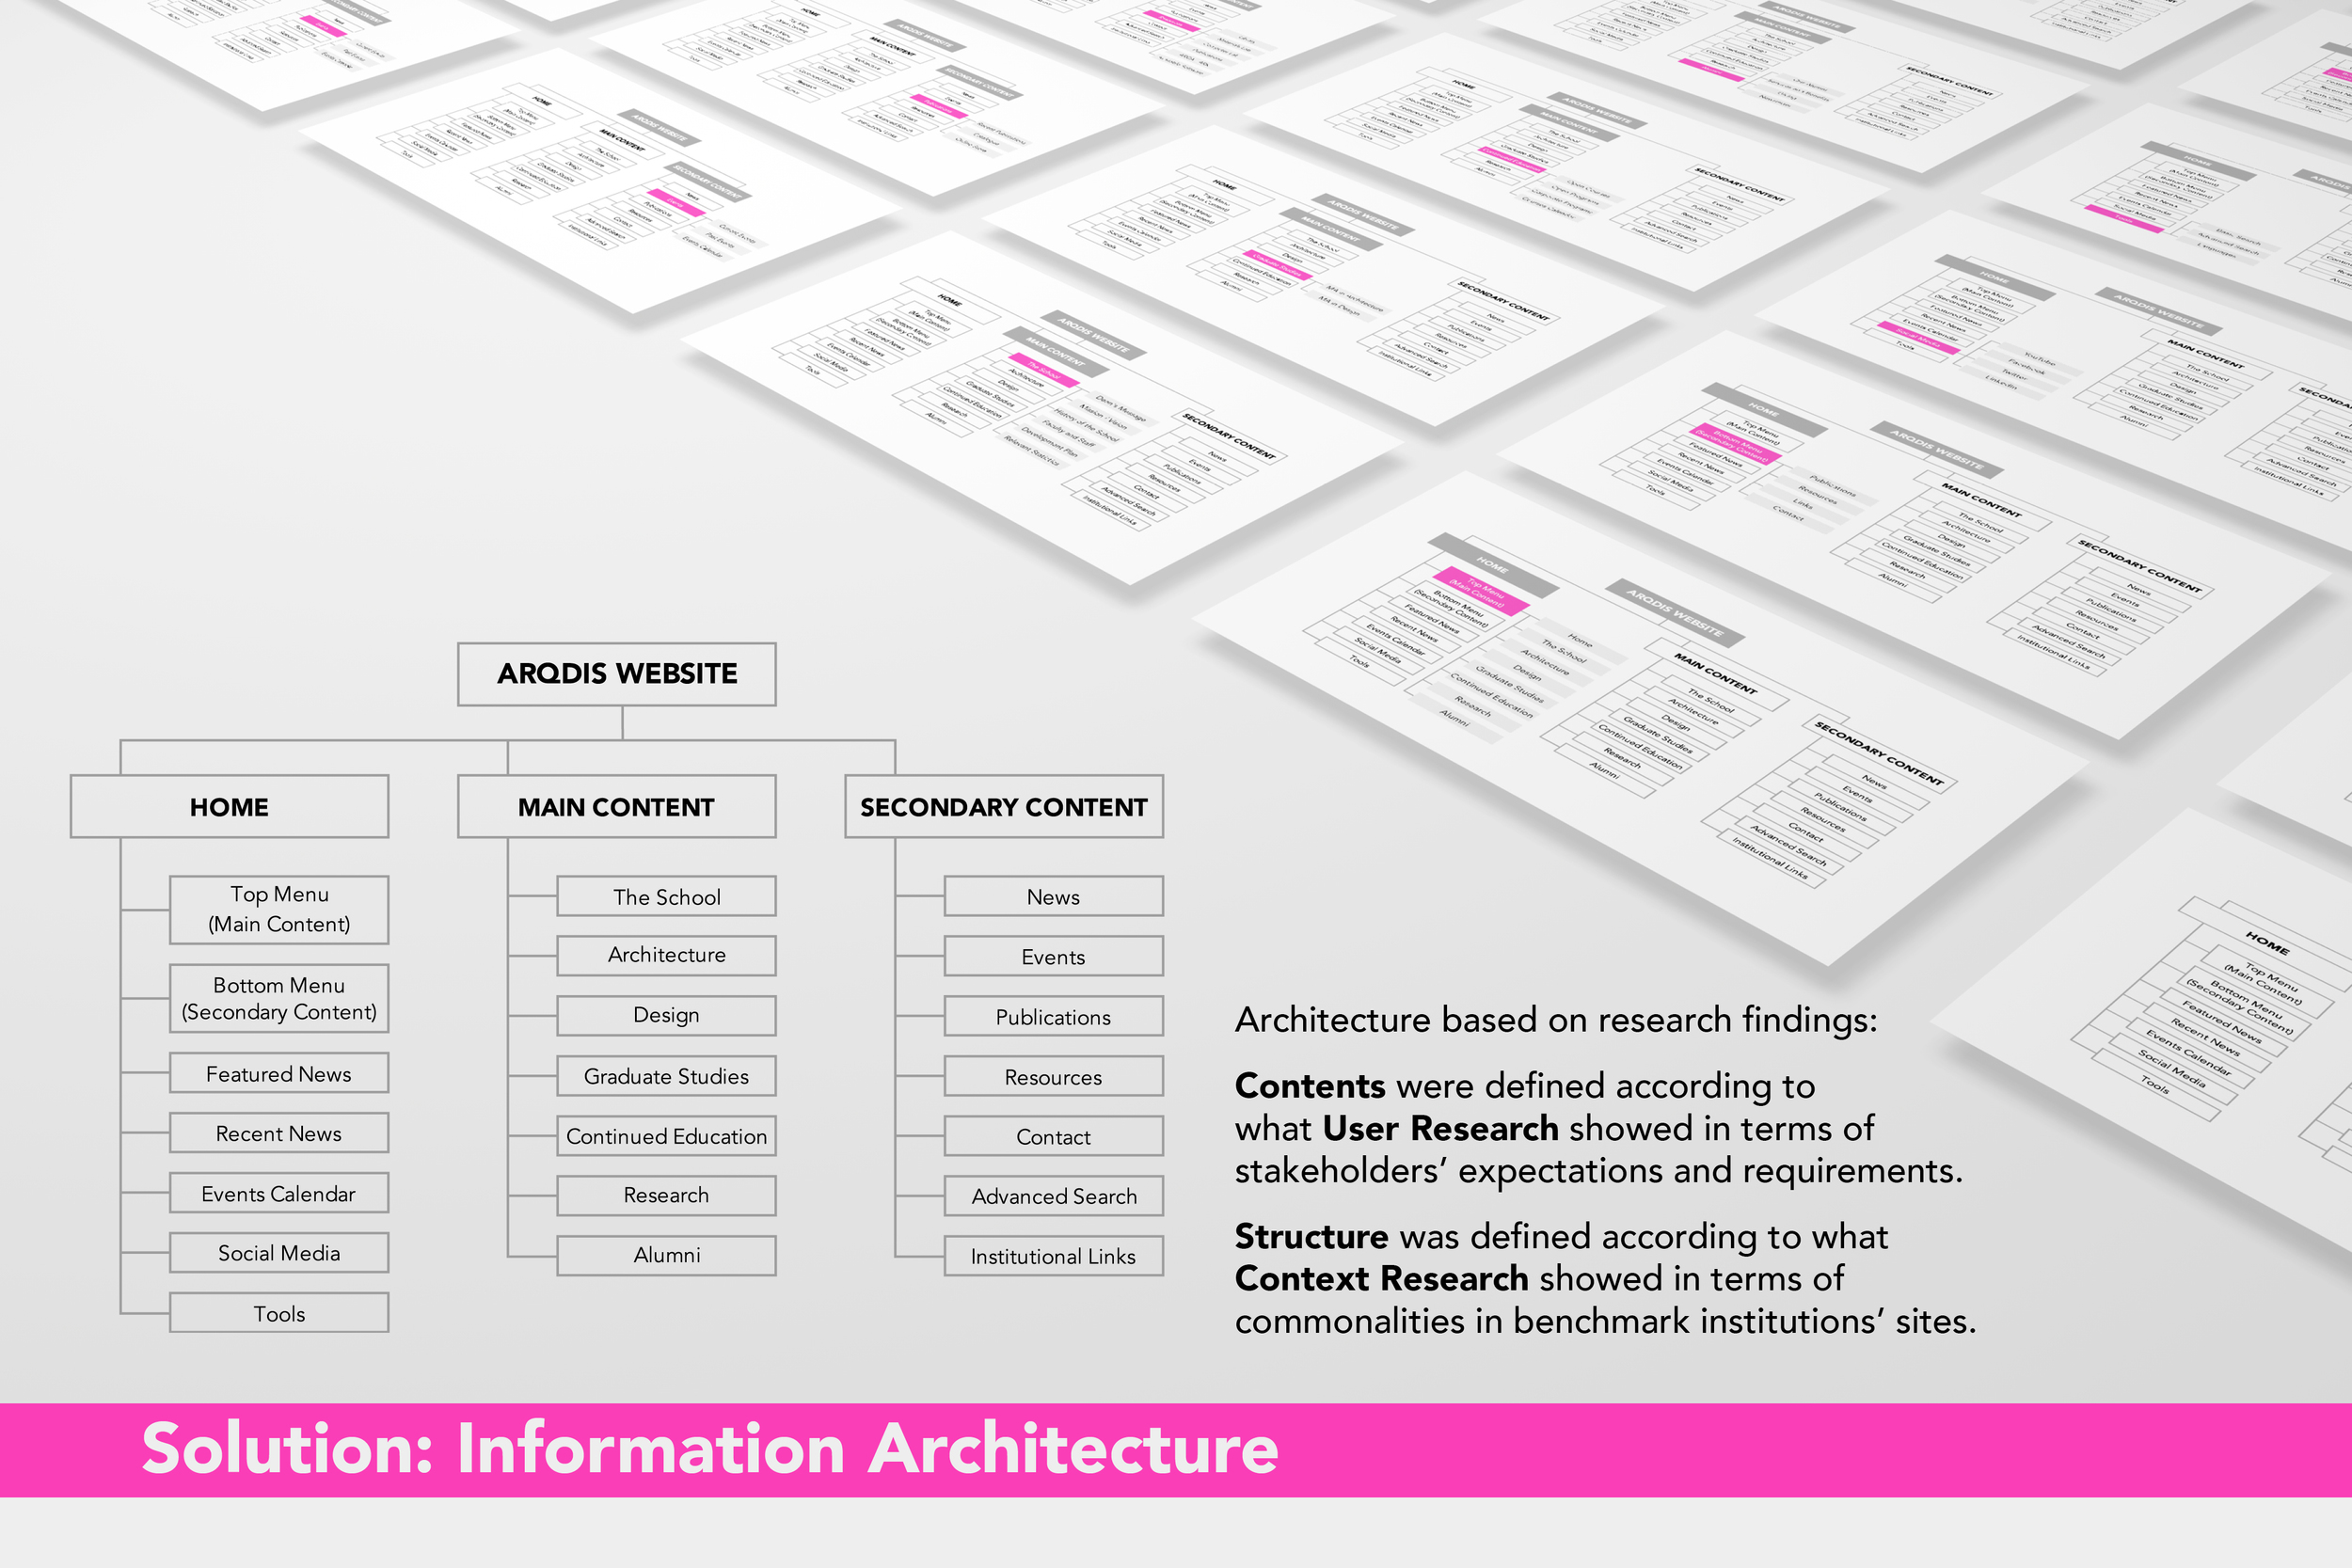 ARQDIS Website: Information Architecture